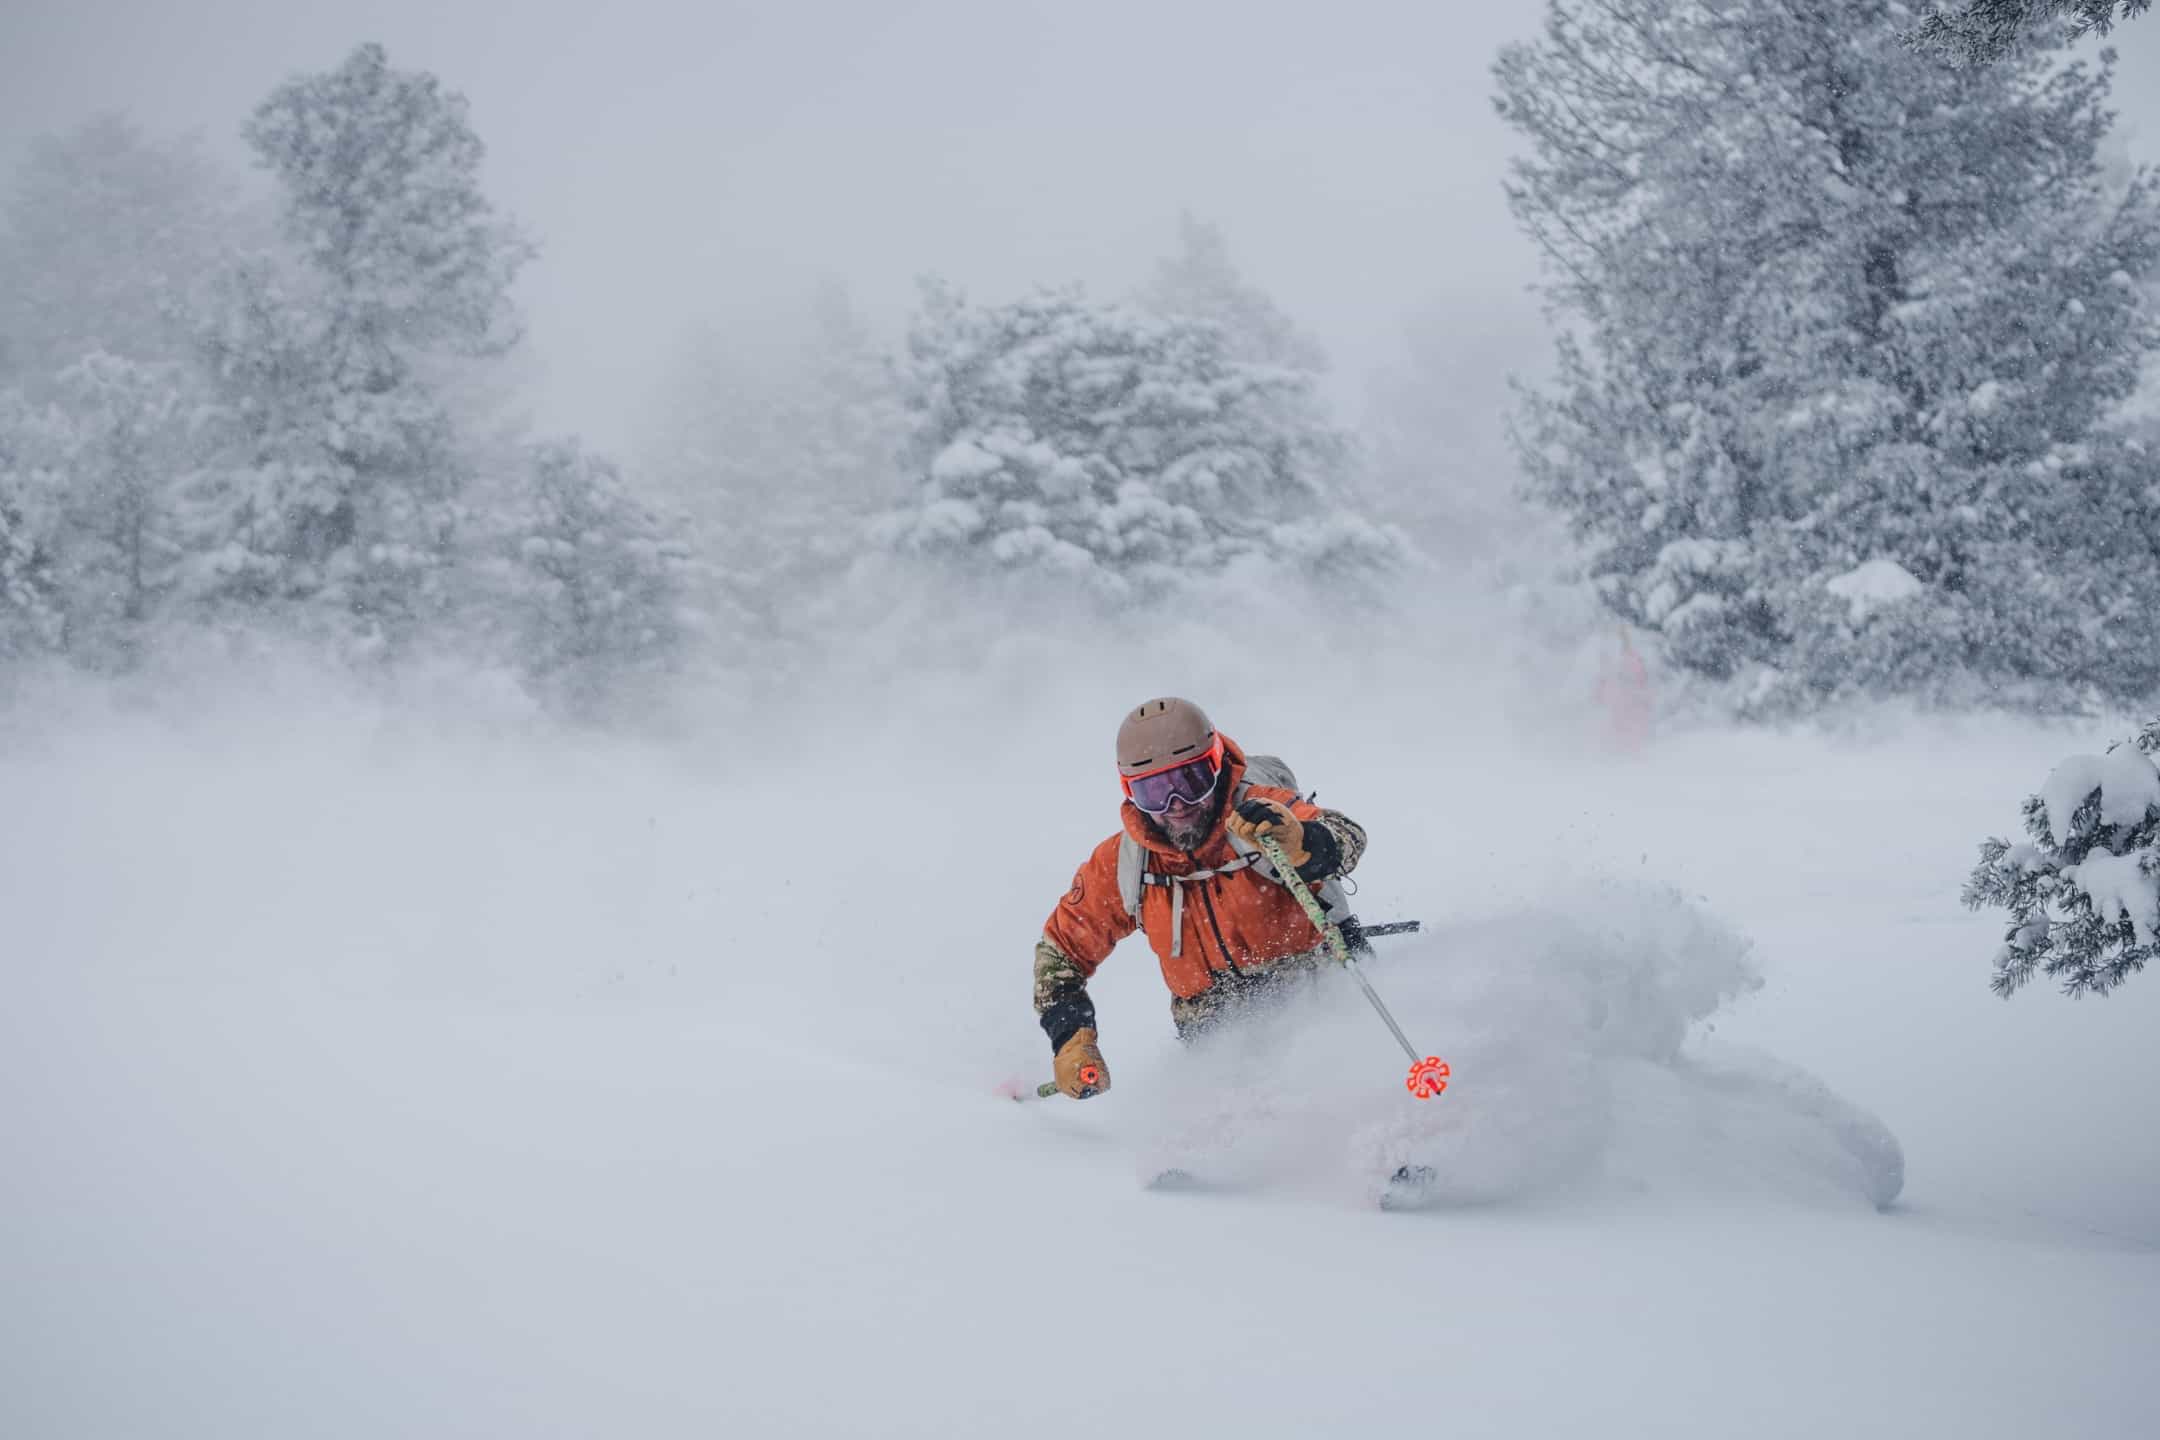 skier in deep snow while its snowing at powder mountain utah